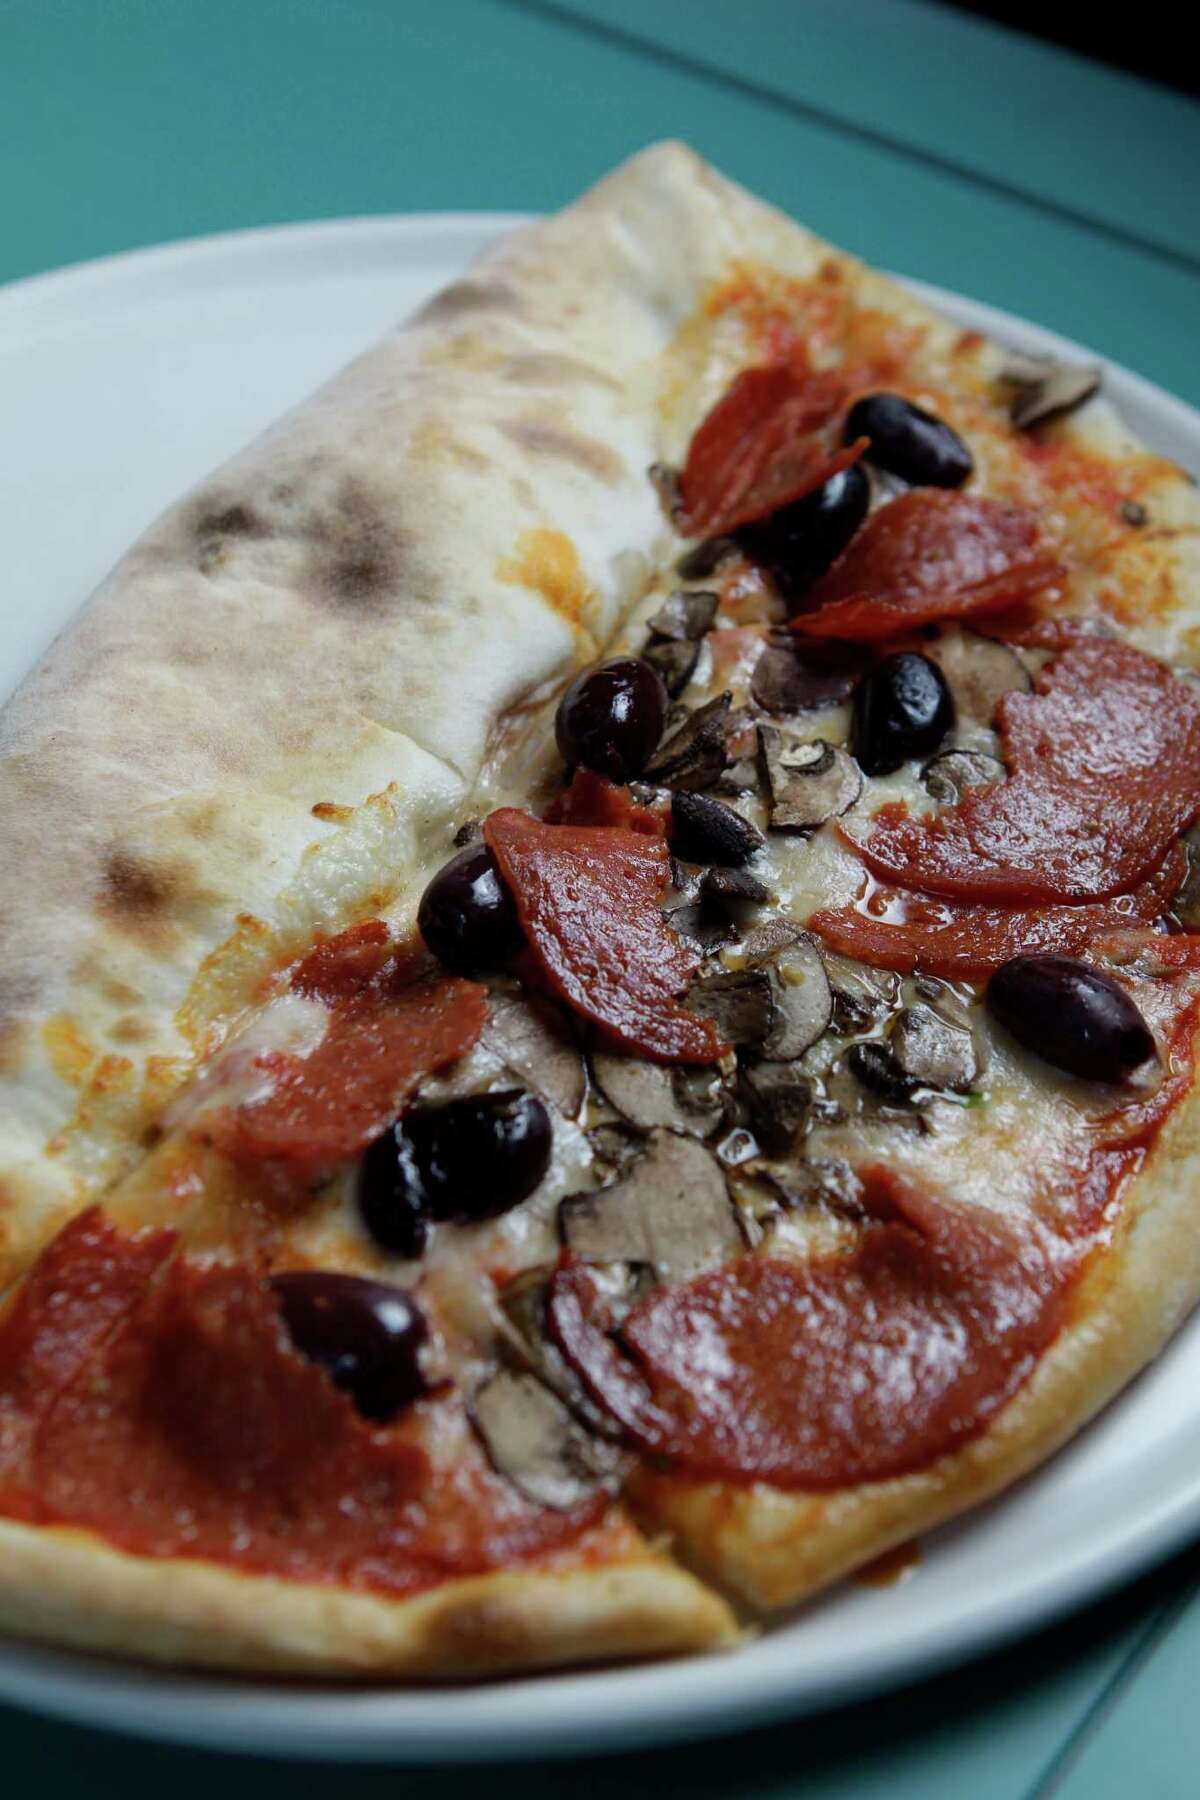 Mascalzone's namesake dish, a half-pizza and half-calzone